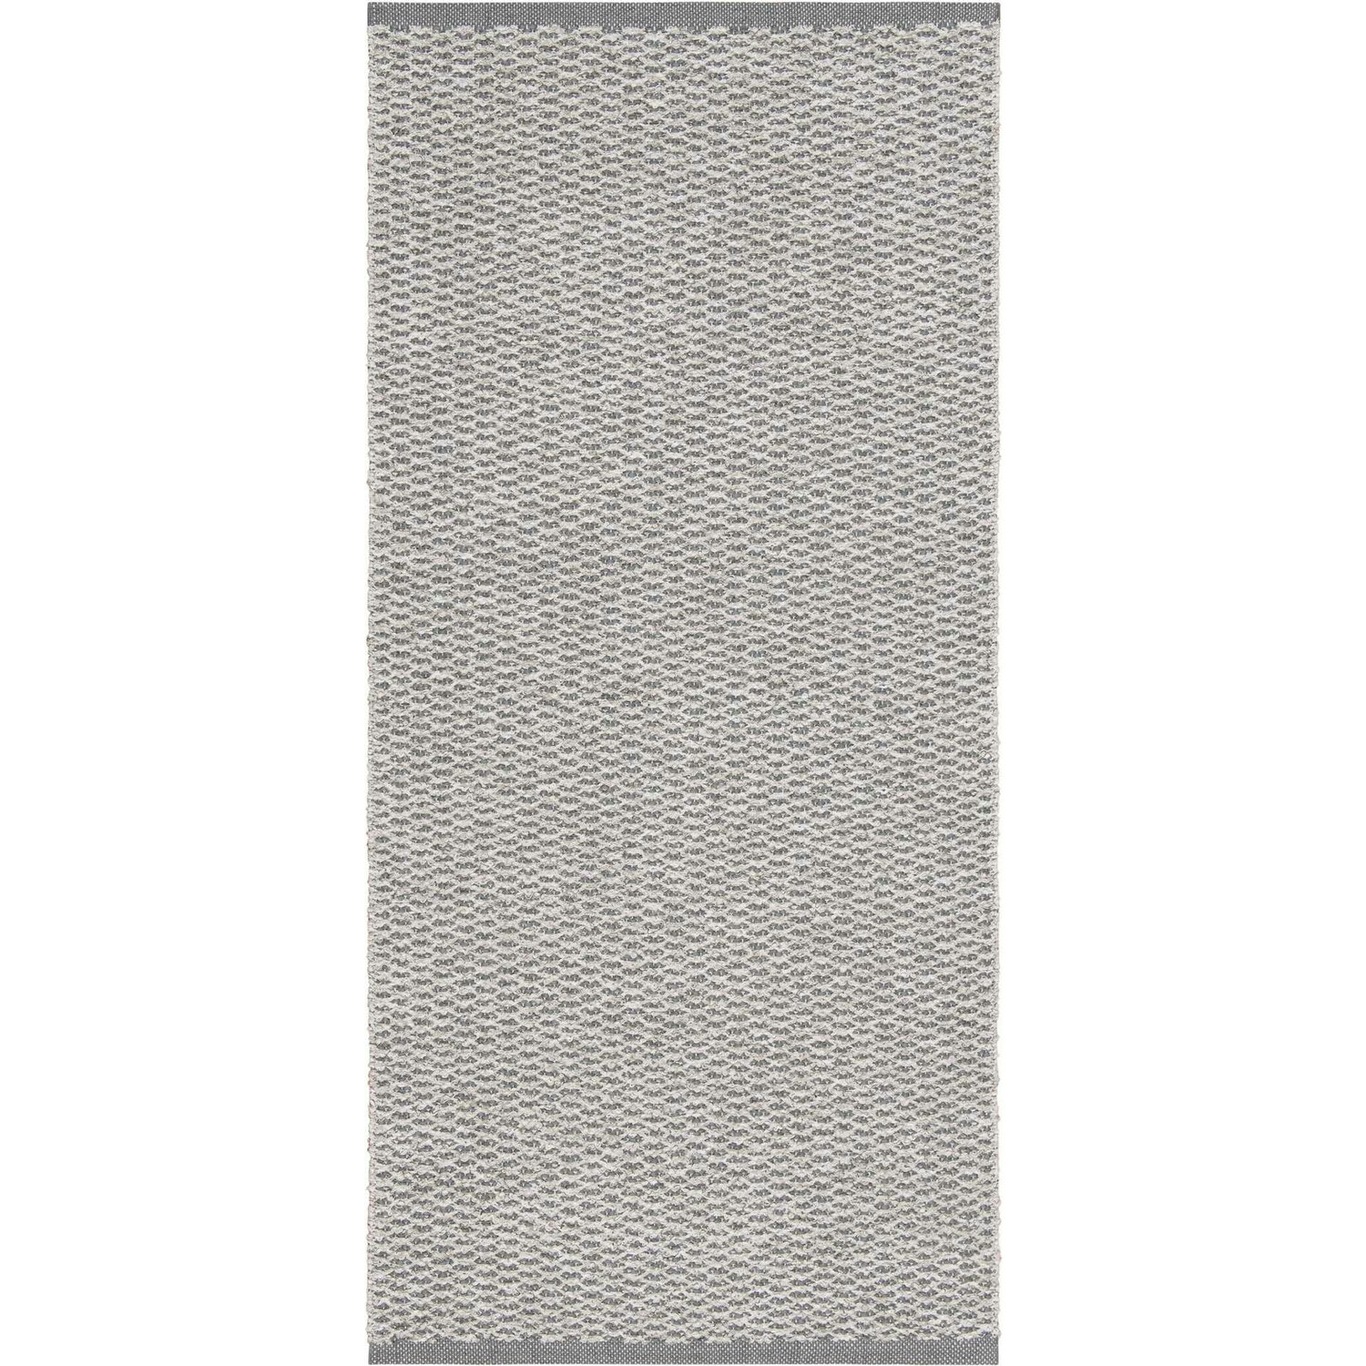 Mixed Signe Rug 200x300 cm, Light Grey